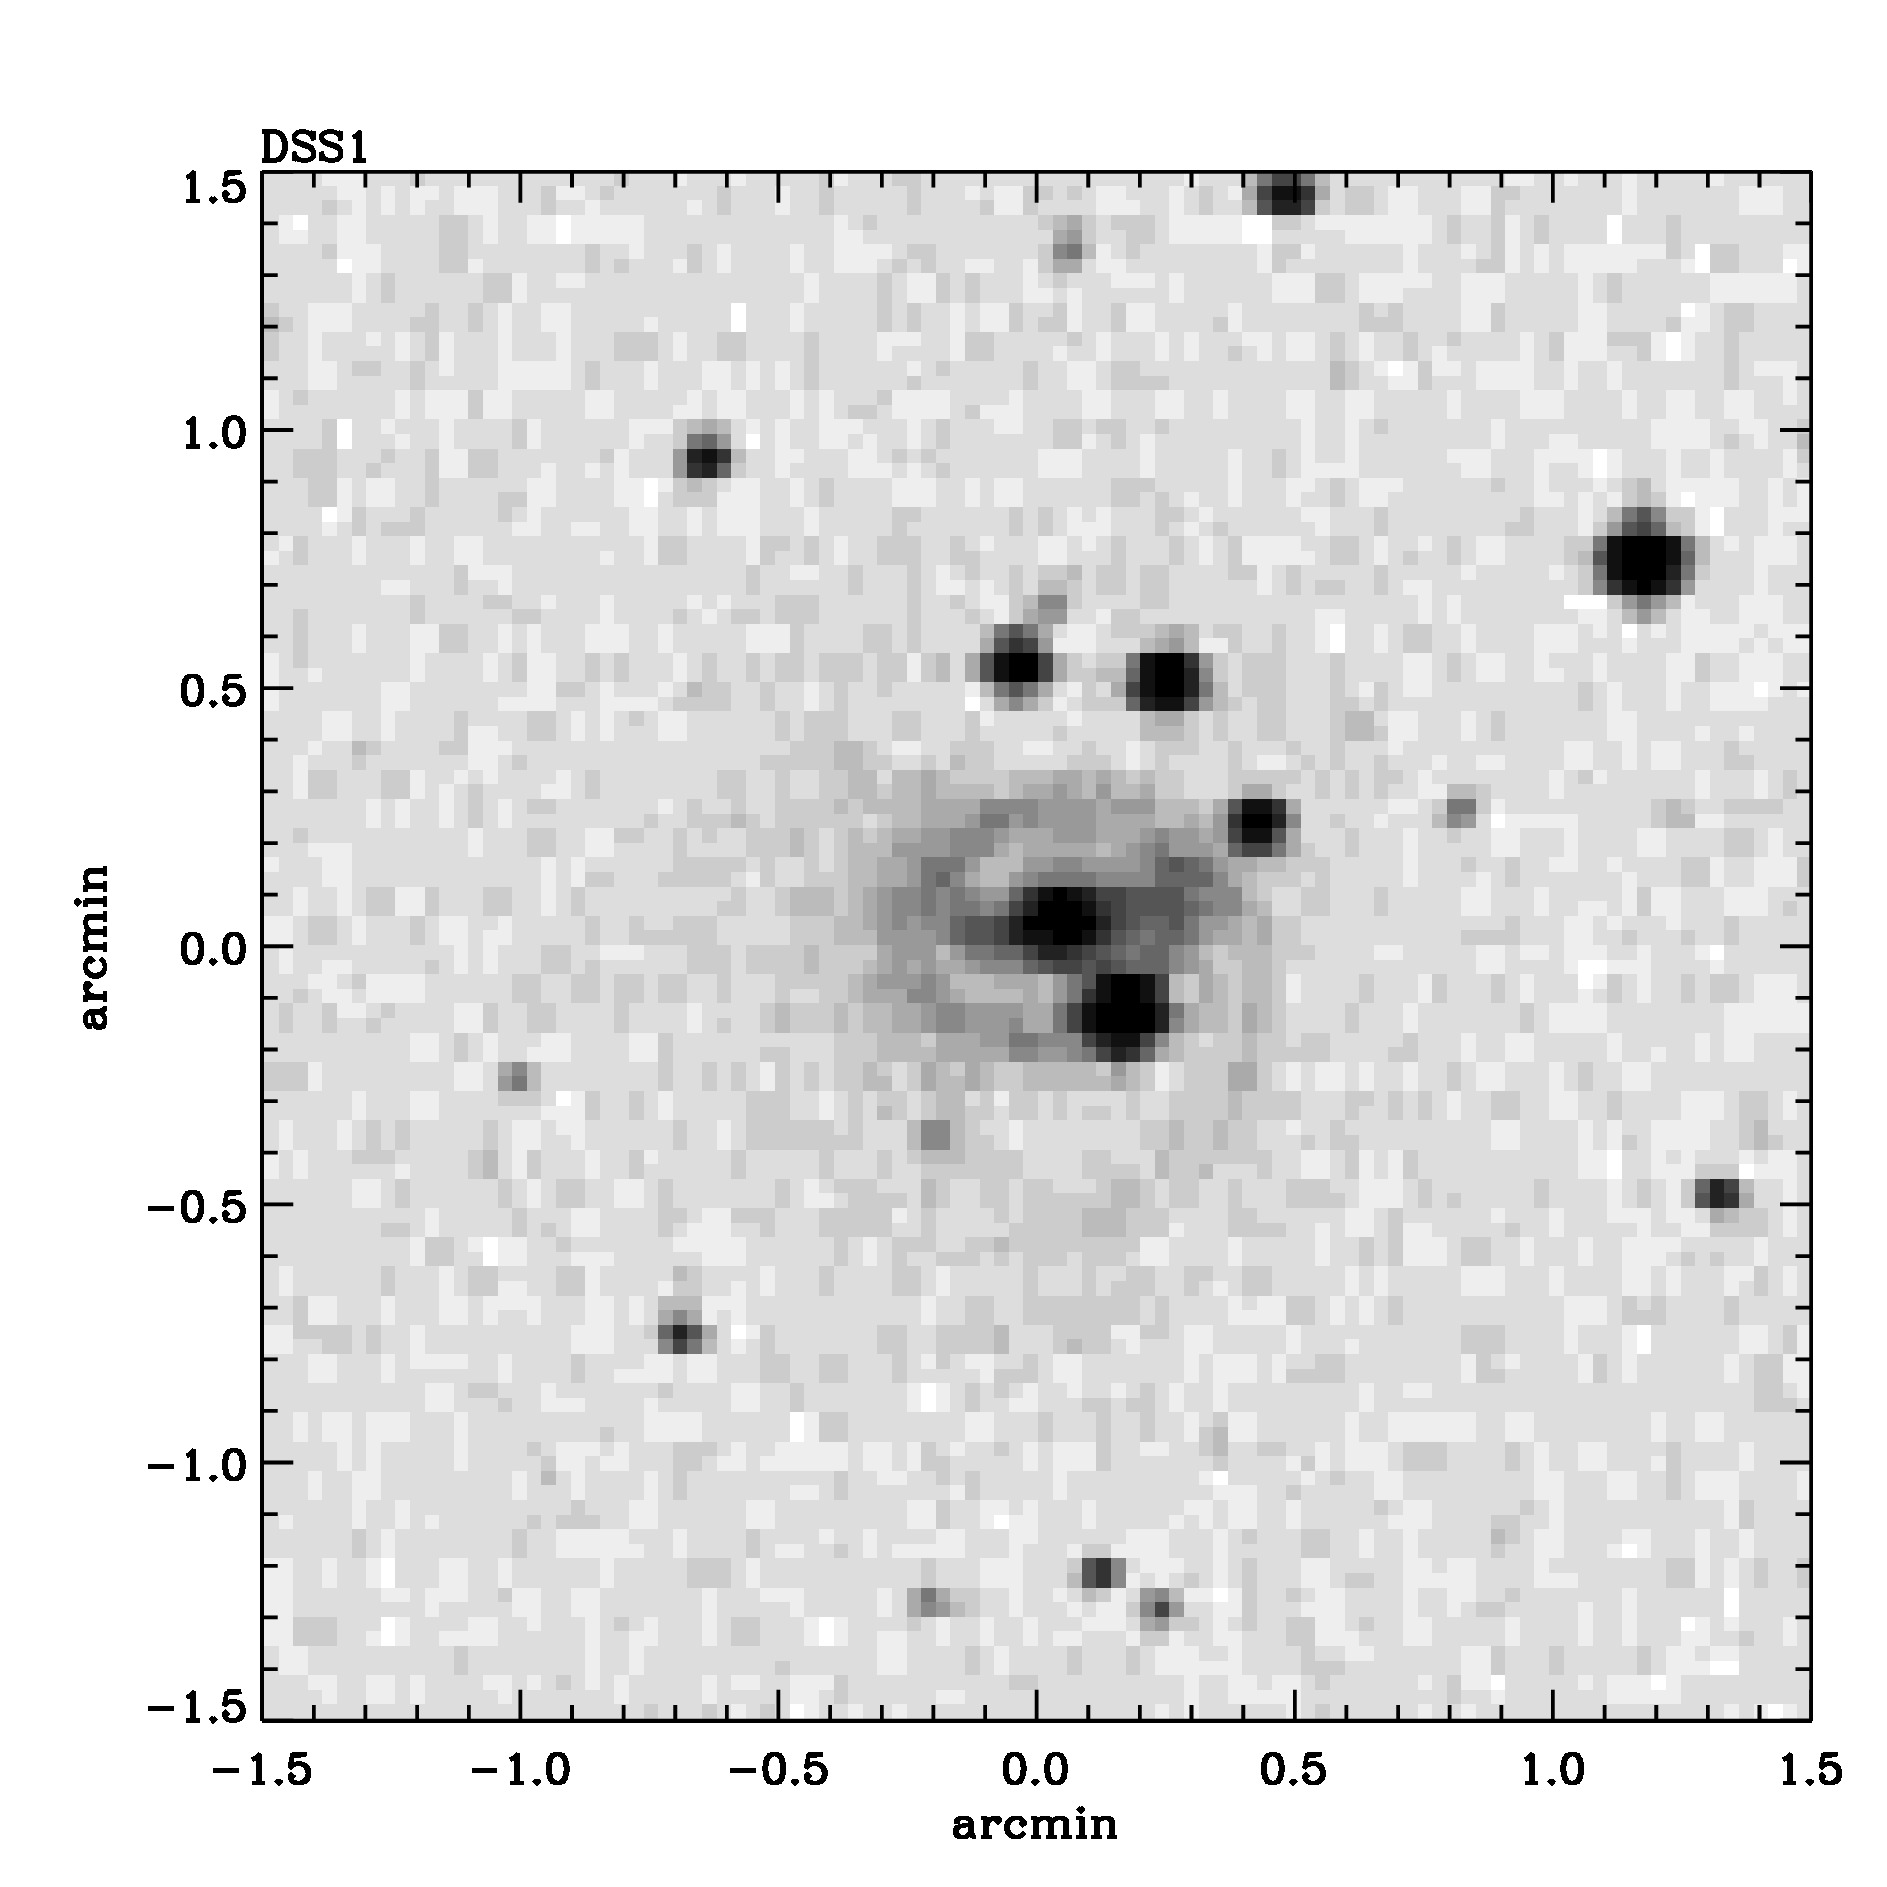 Optical image for SWIFT J0516.4-1034